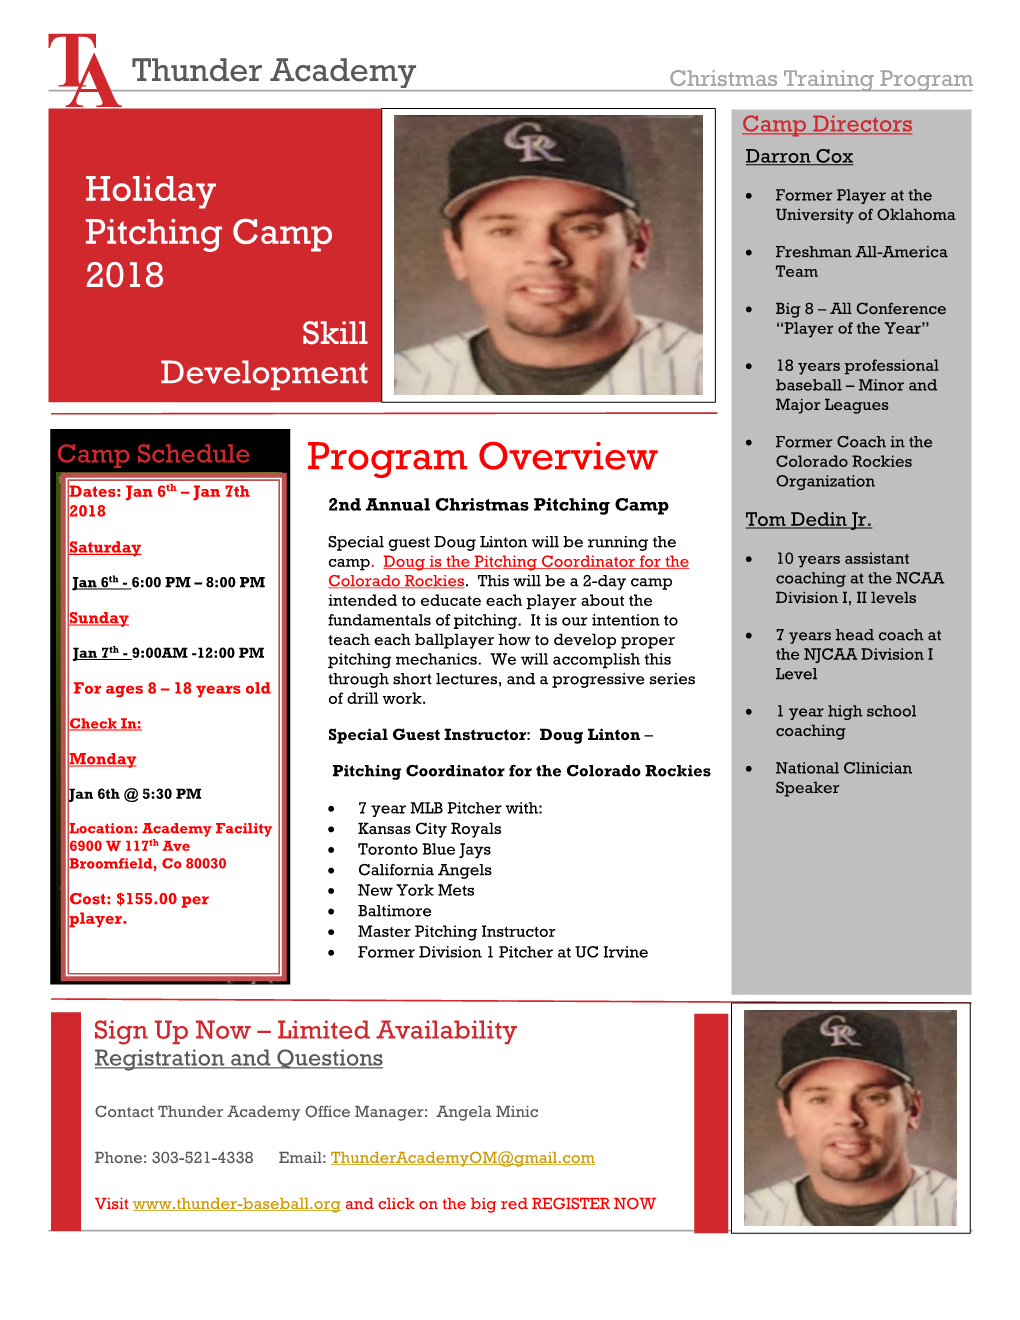 Program Overview Colorado Rockies Organization Dates: Jan 6Th – Jan 7Th 2Nd Annual Christmas Pitching Camp 2018 Tom Dedin Jr